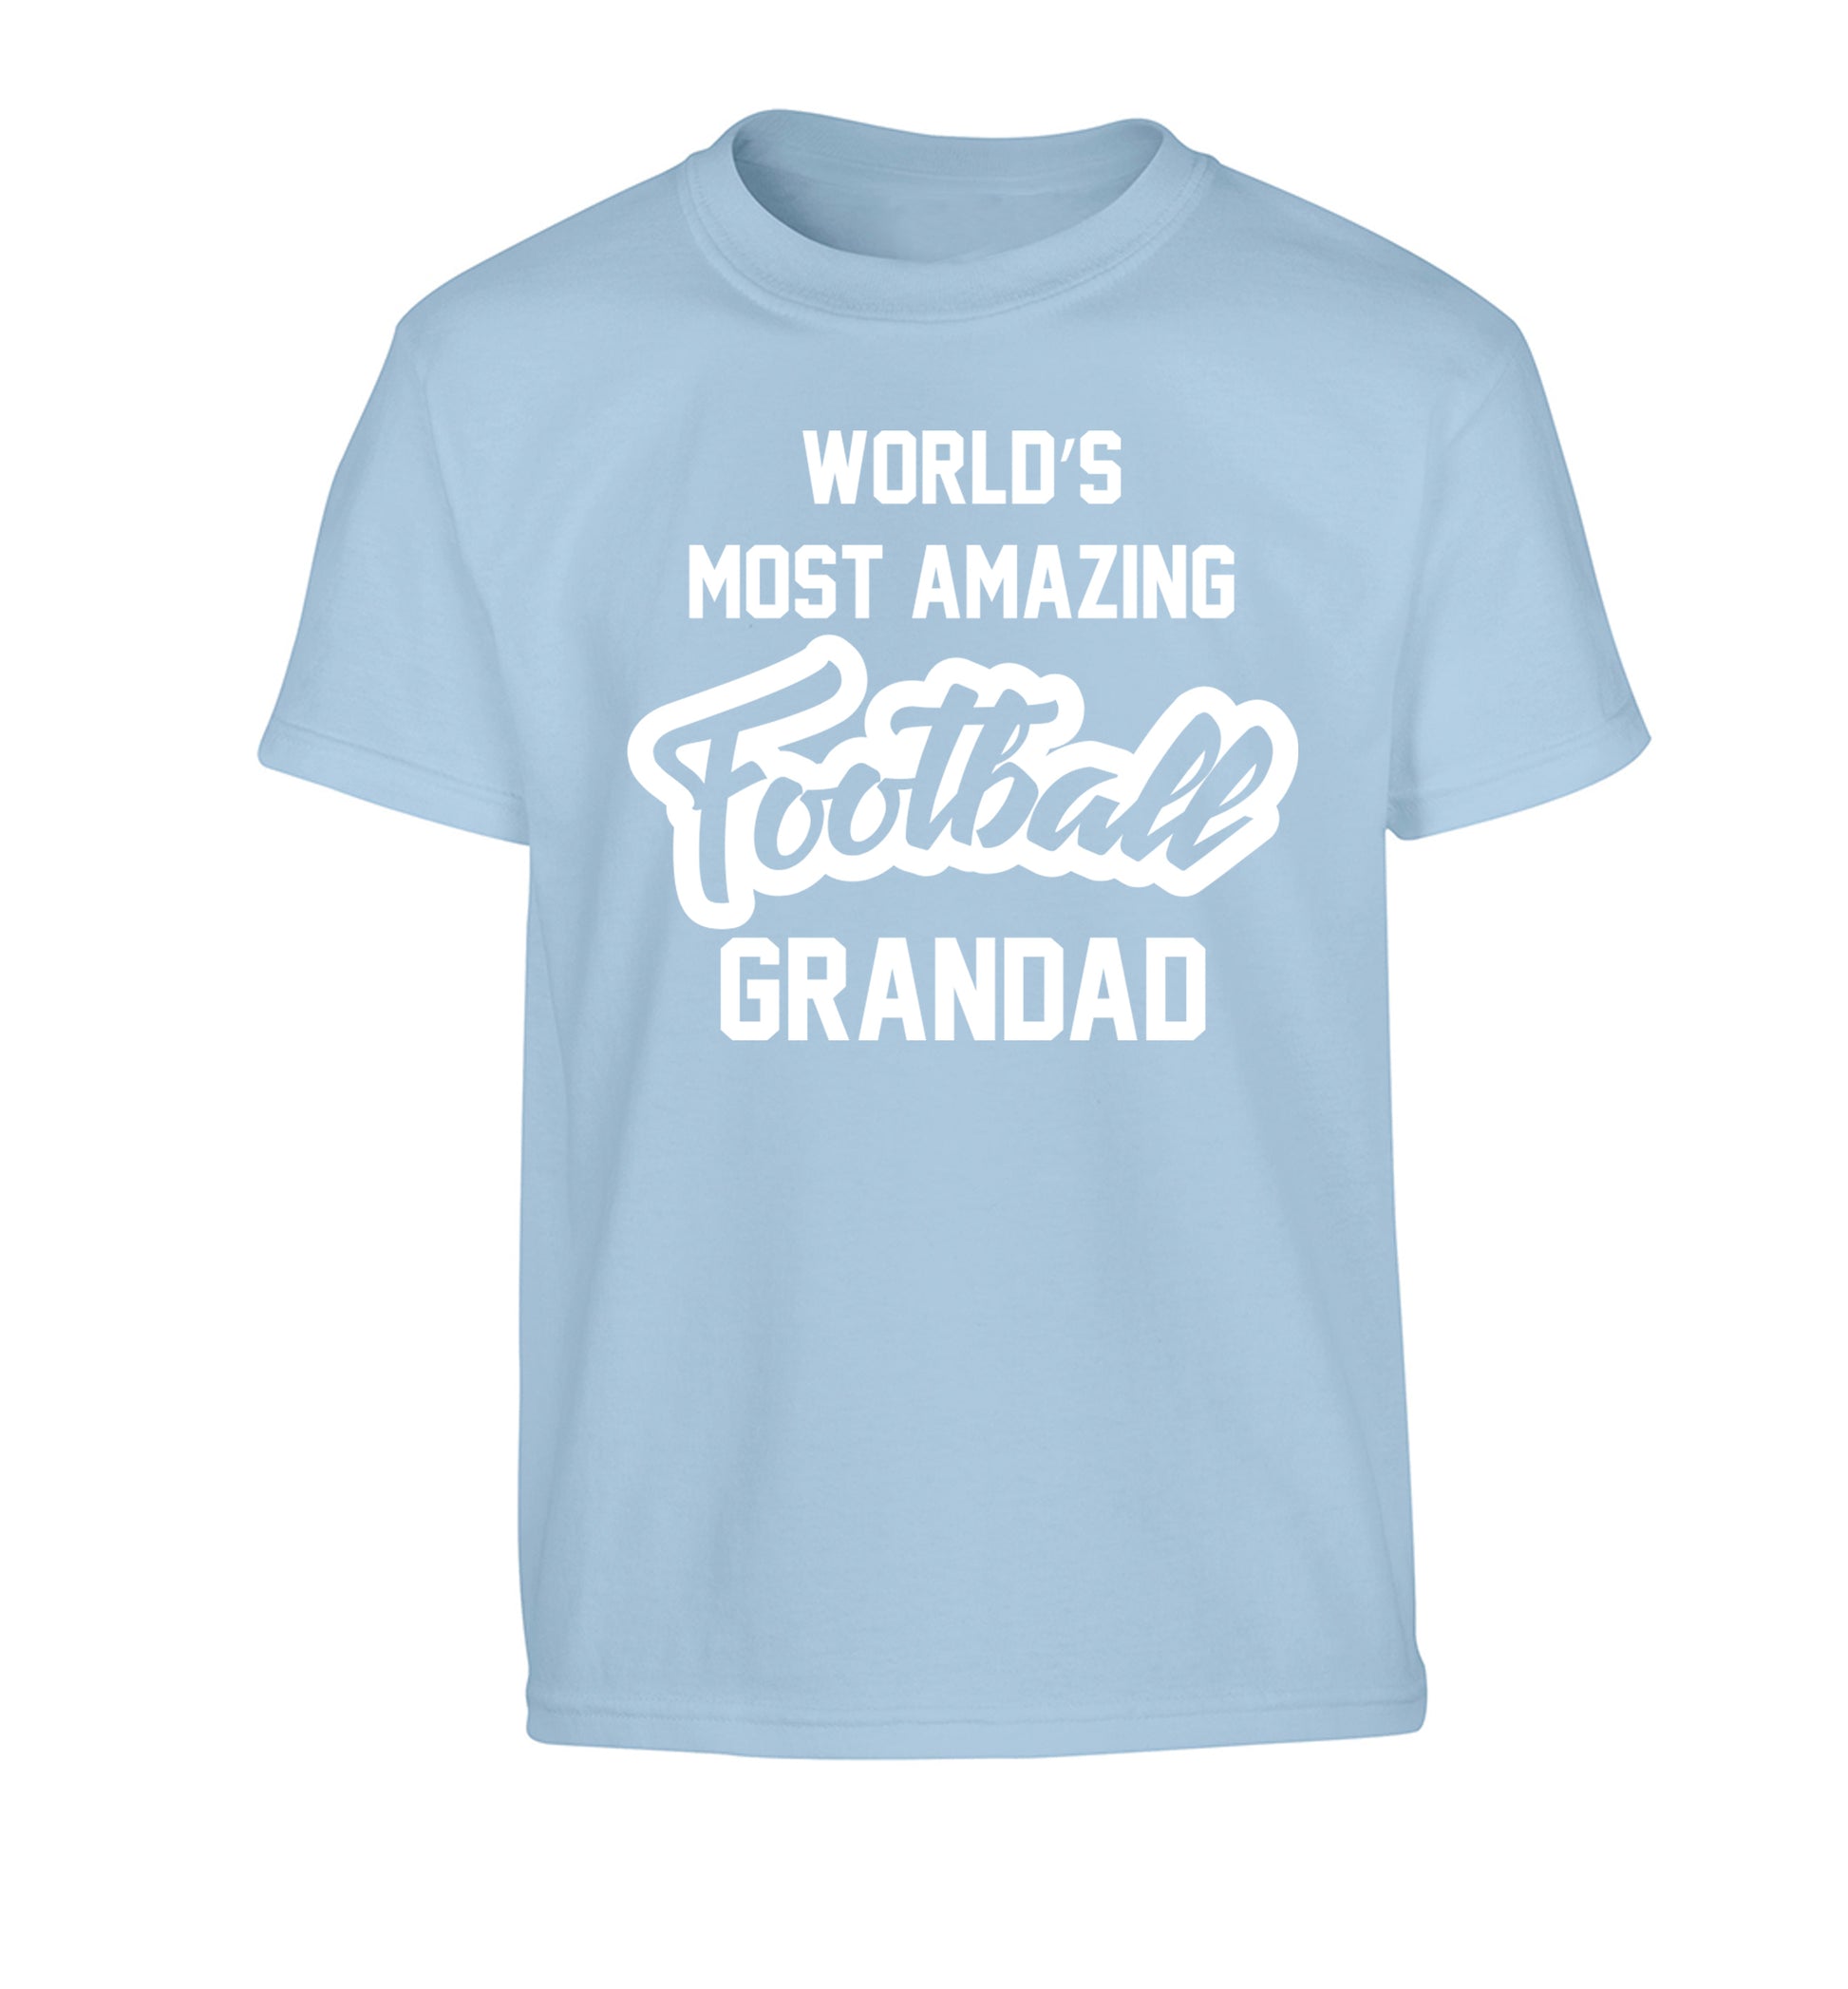 Worlds most amazing football grandad Children's light blue Tshirt 12-14 Years